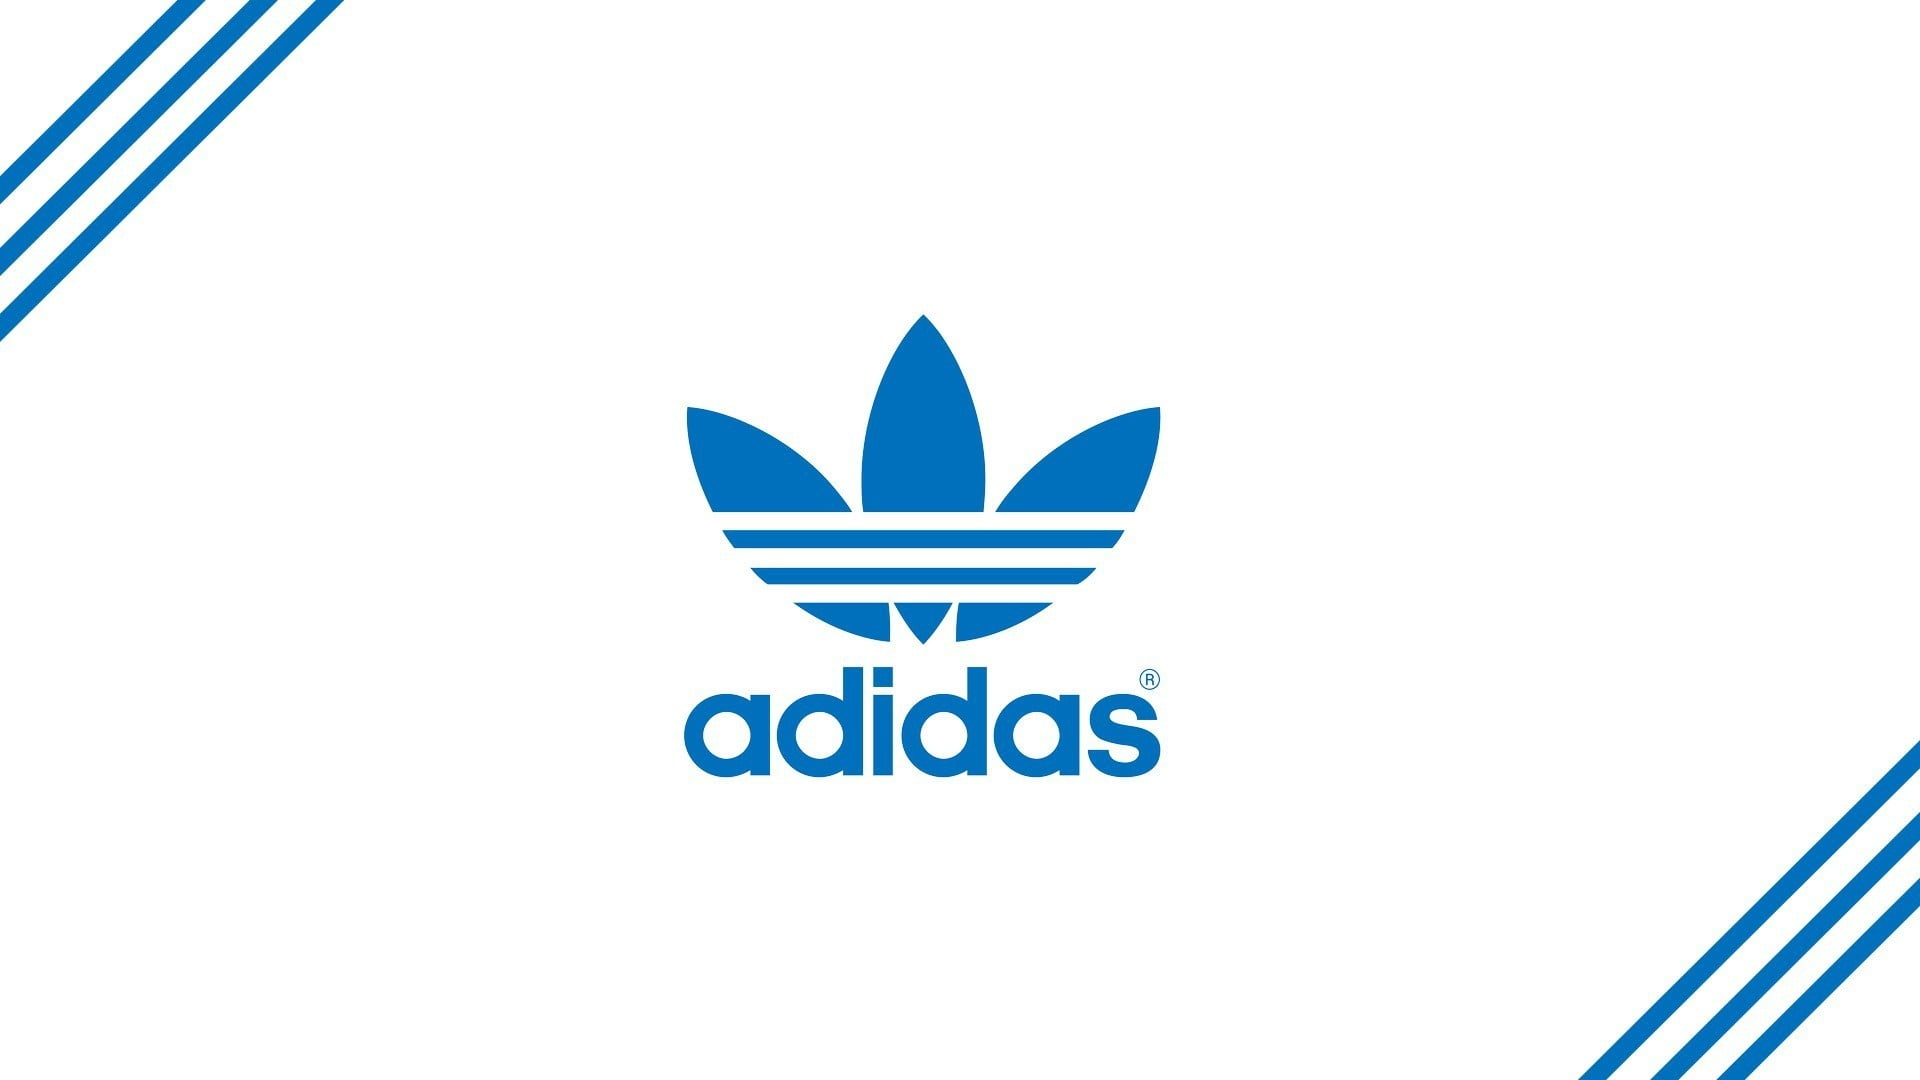 Adidas logo wallpaper, text, blue, western script, communication